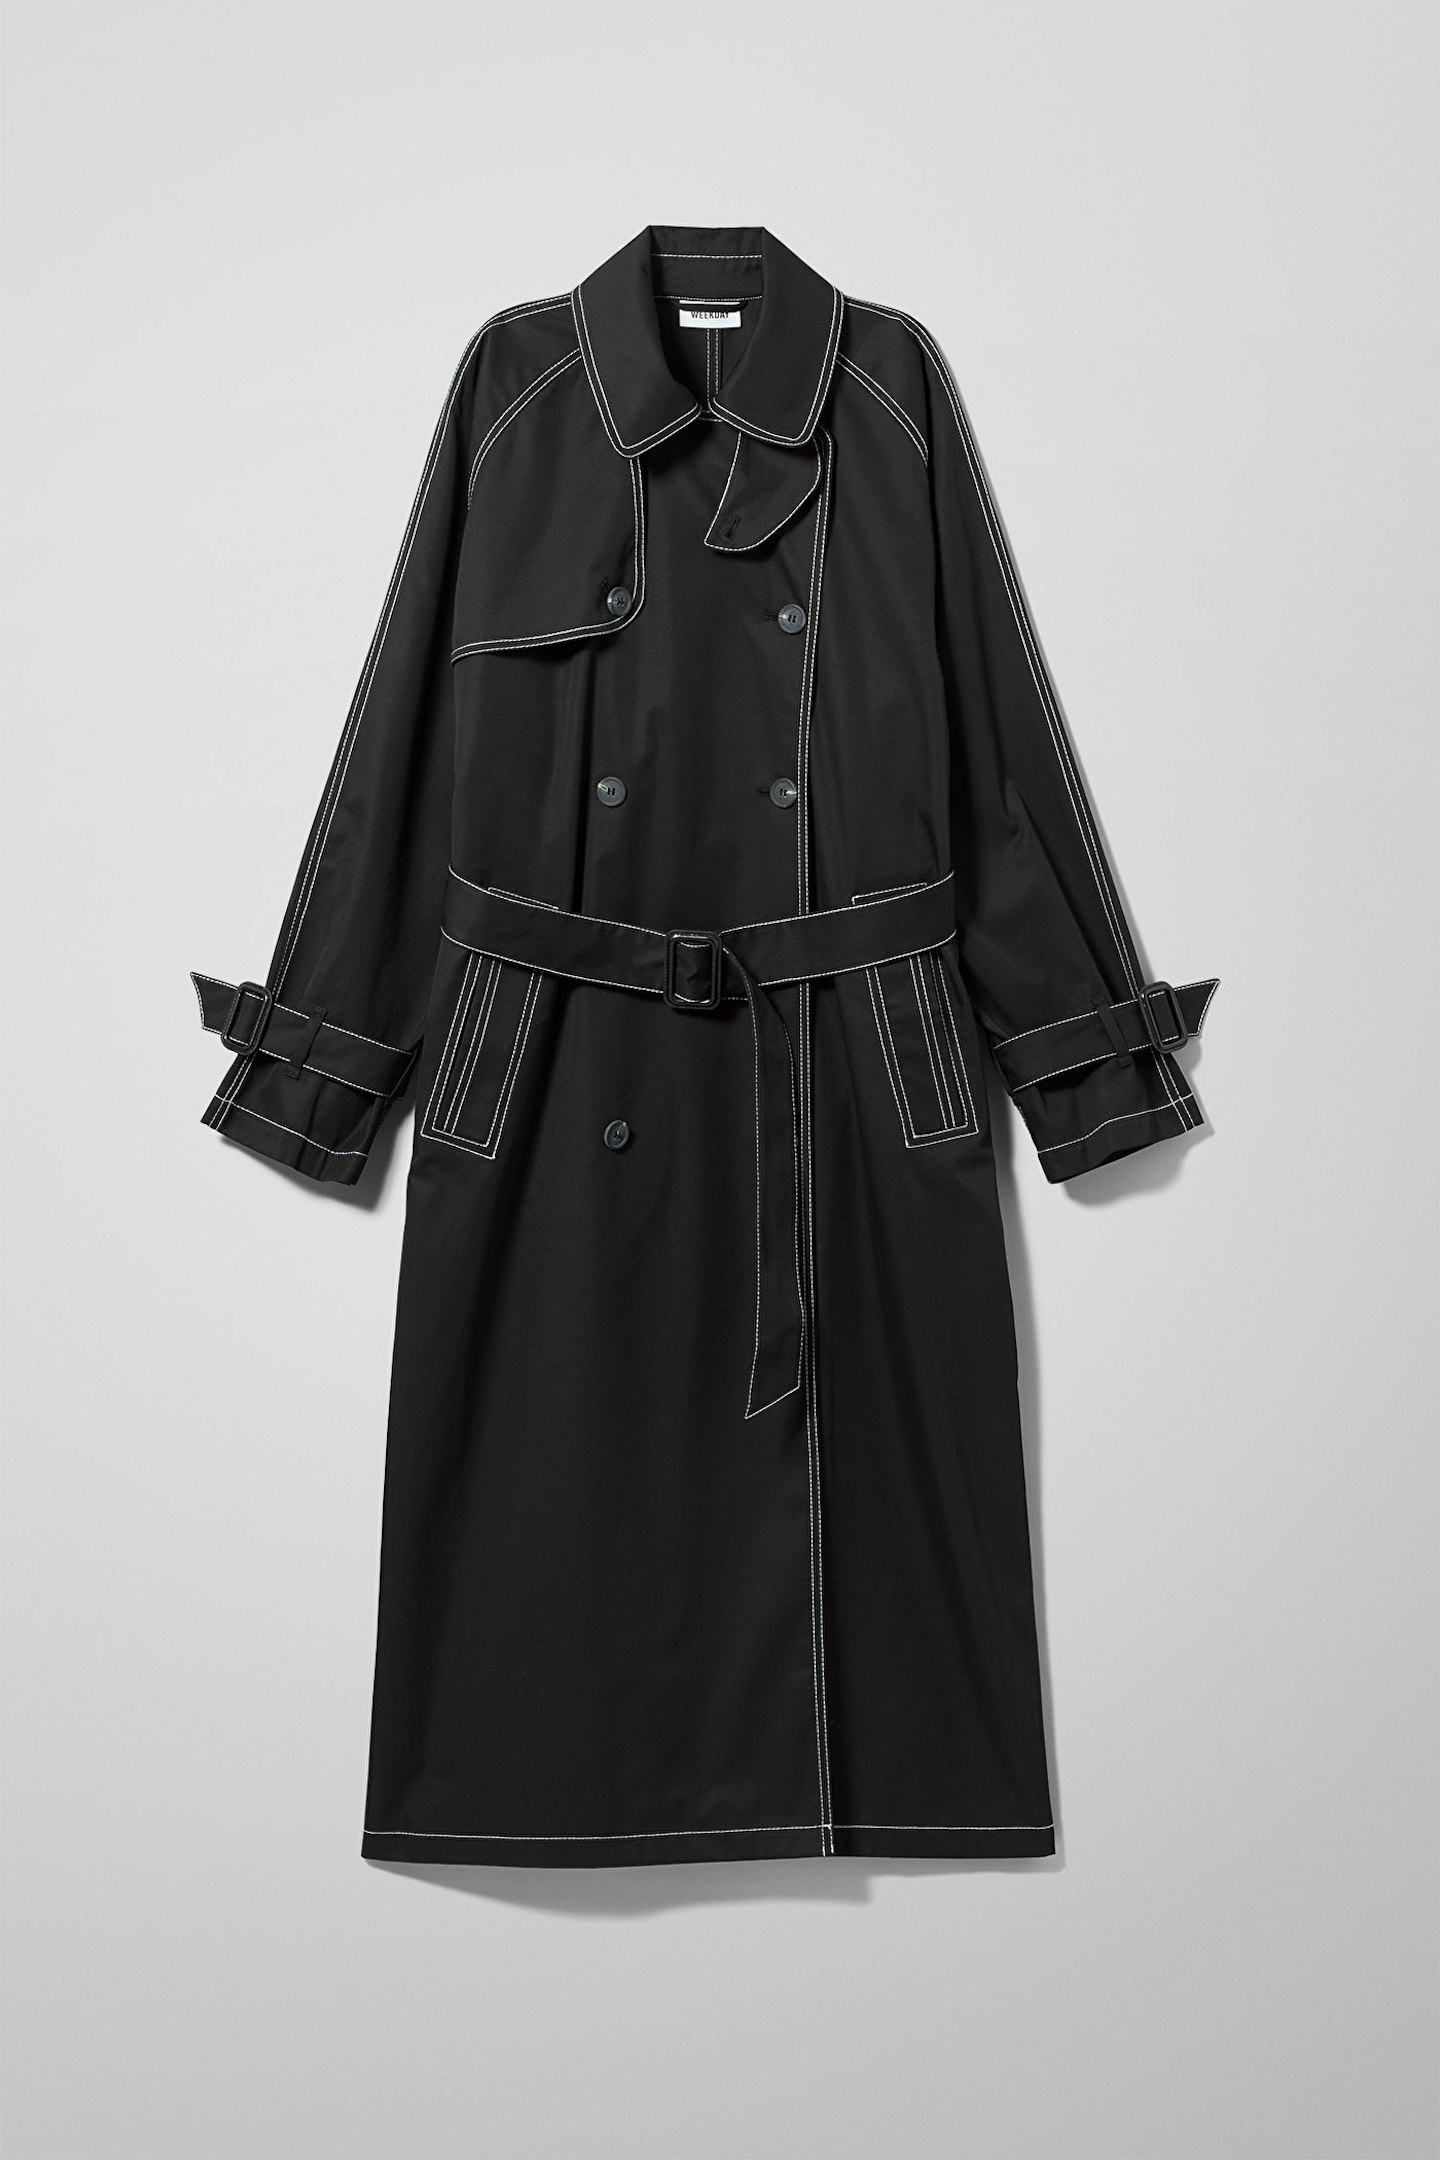 Weekday, Isa Trench Coat, £90